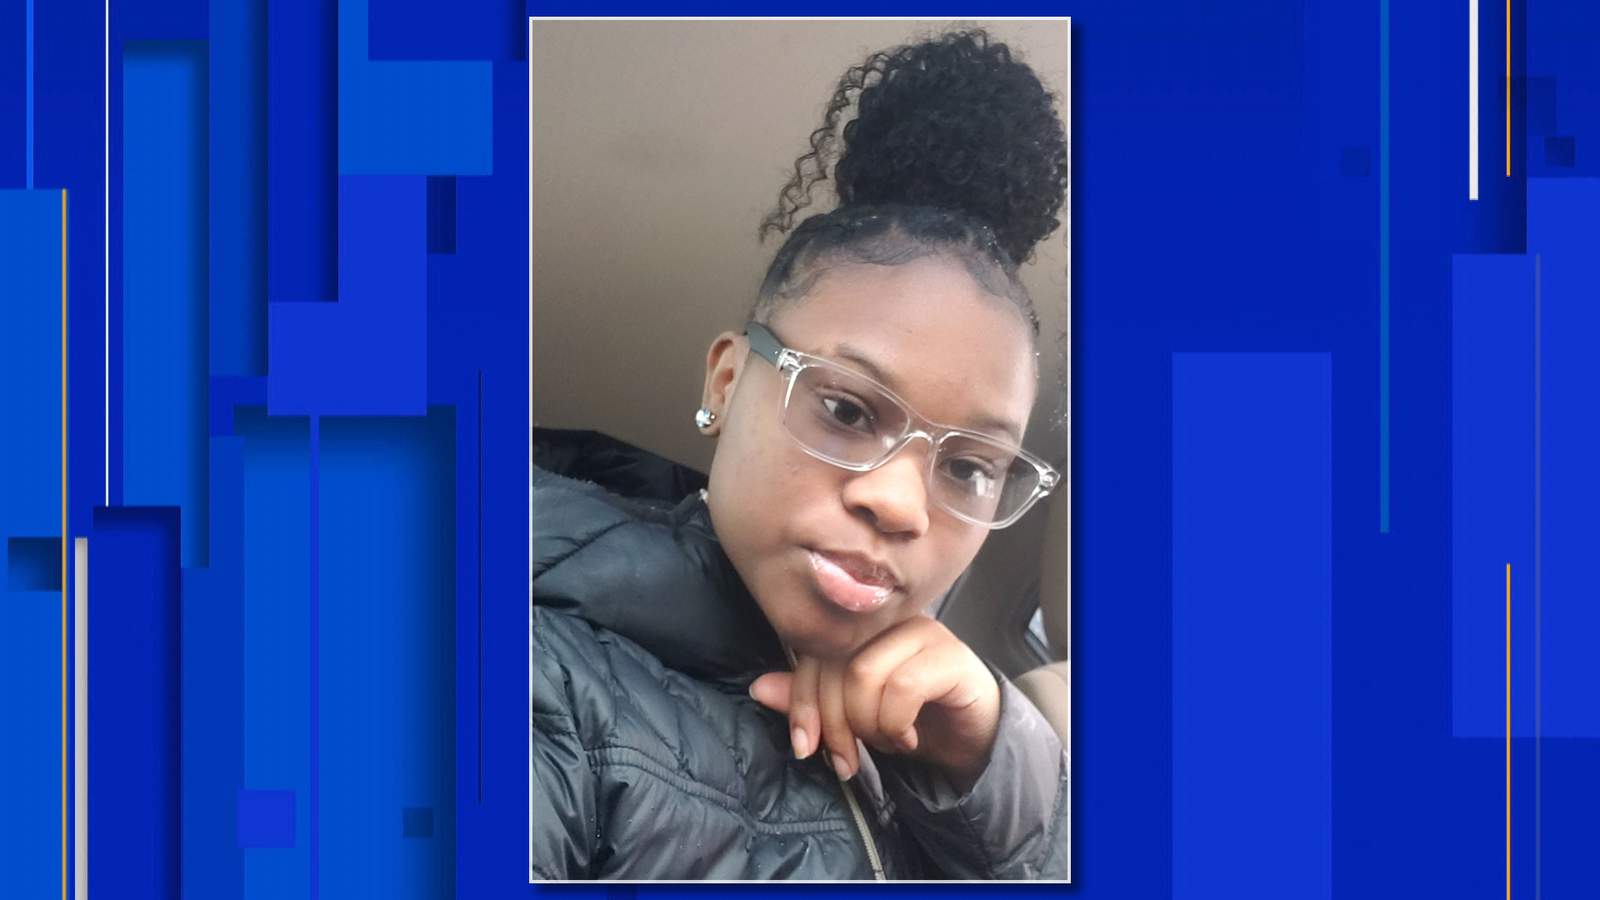 Police seek 16-year-old girl missing on Detroit’s east side